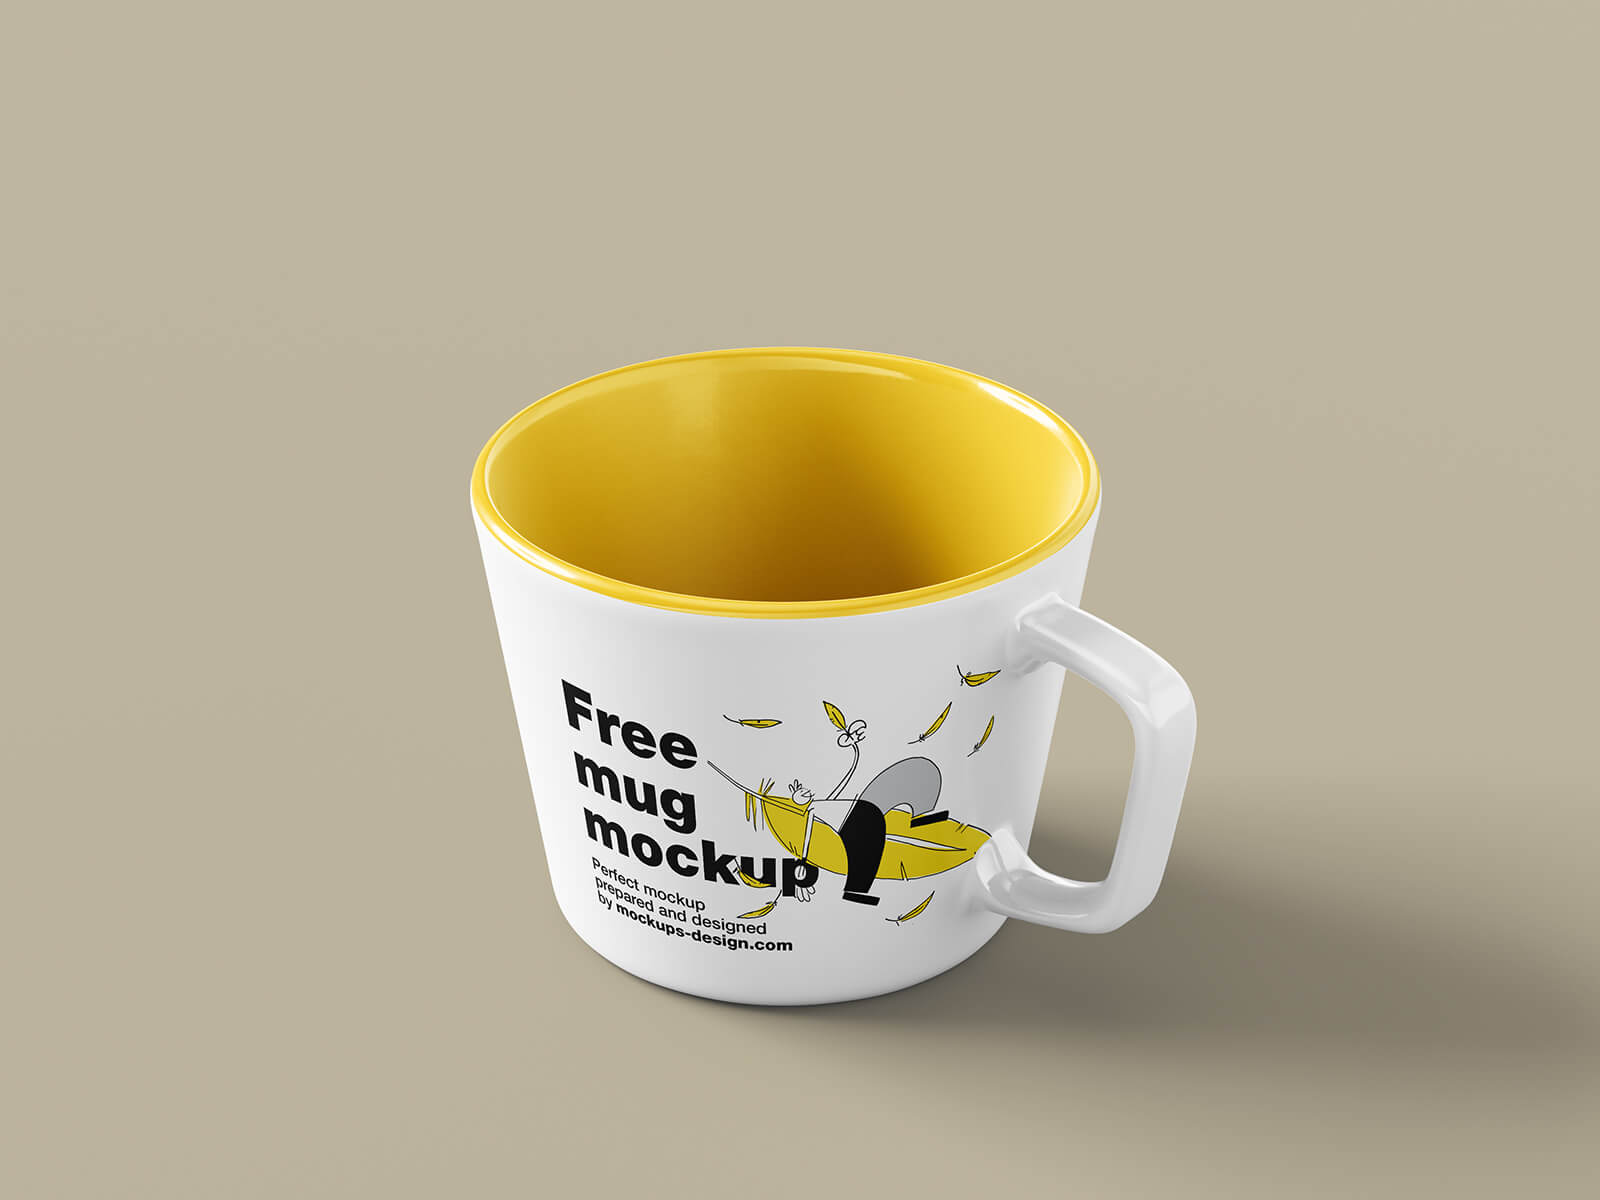 5 Free Small Size Low Cup Mug Mockup PSD Files (1)